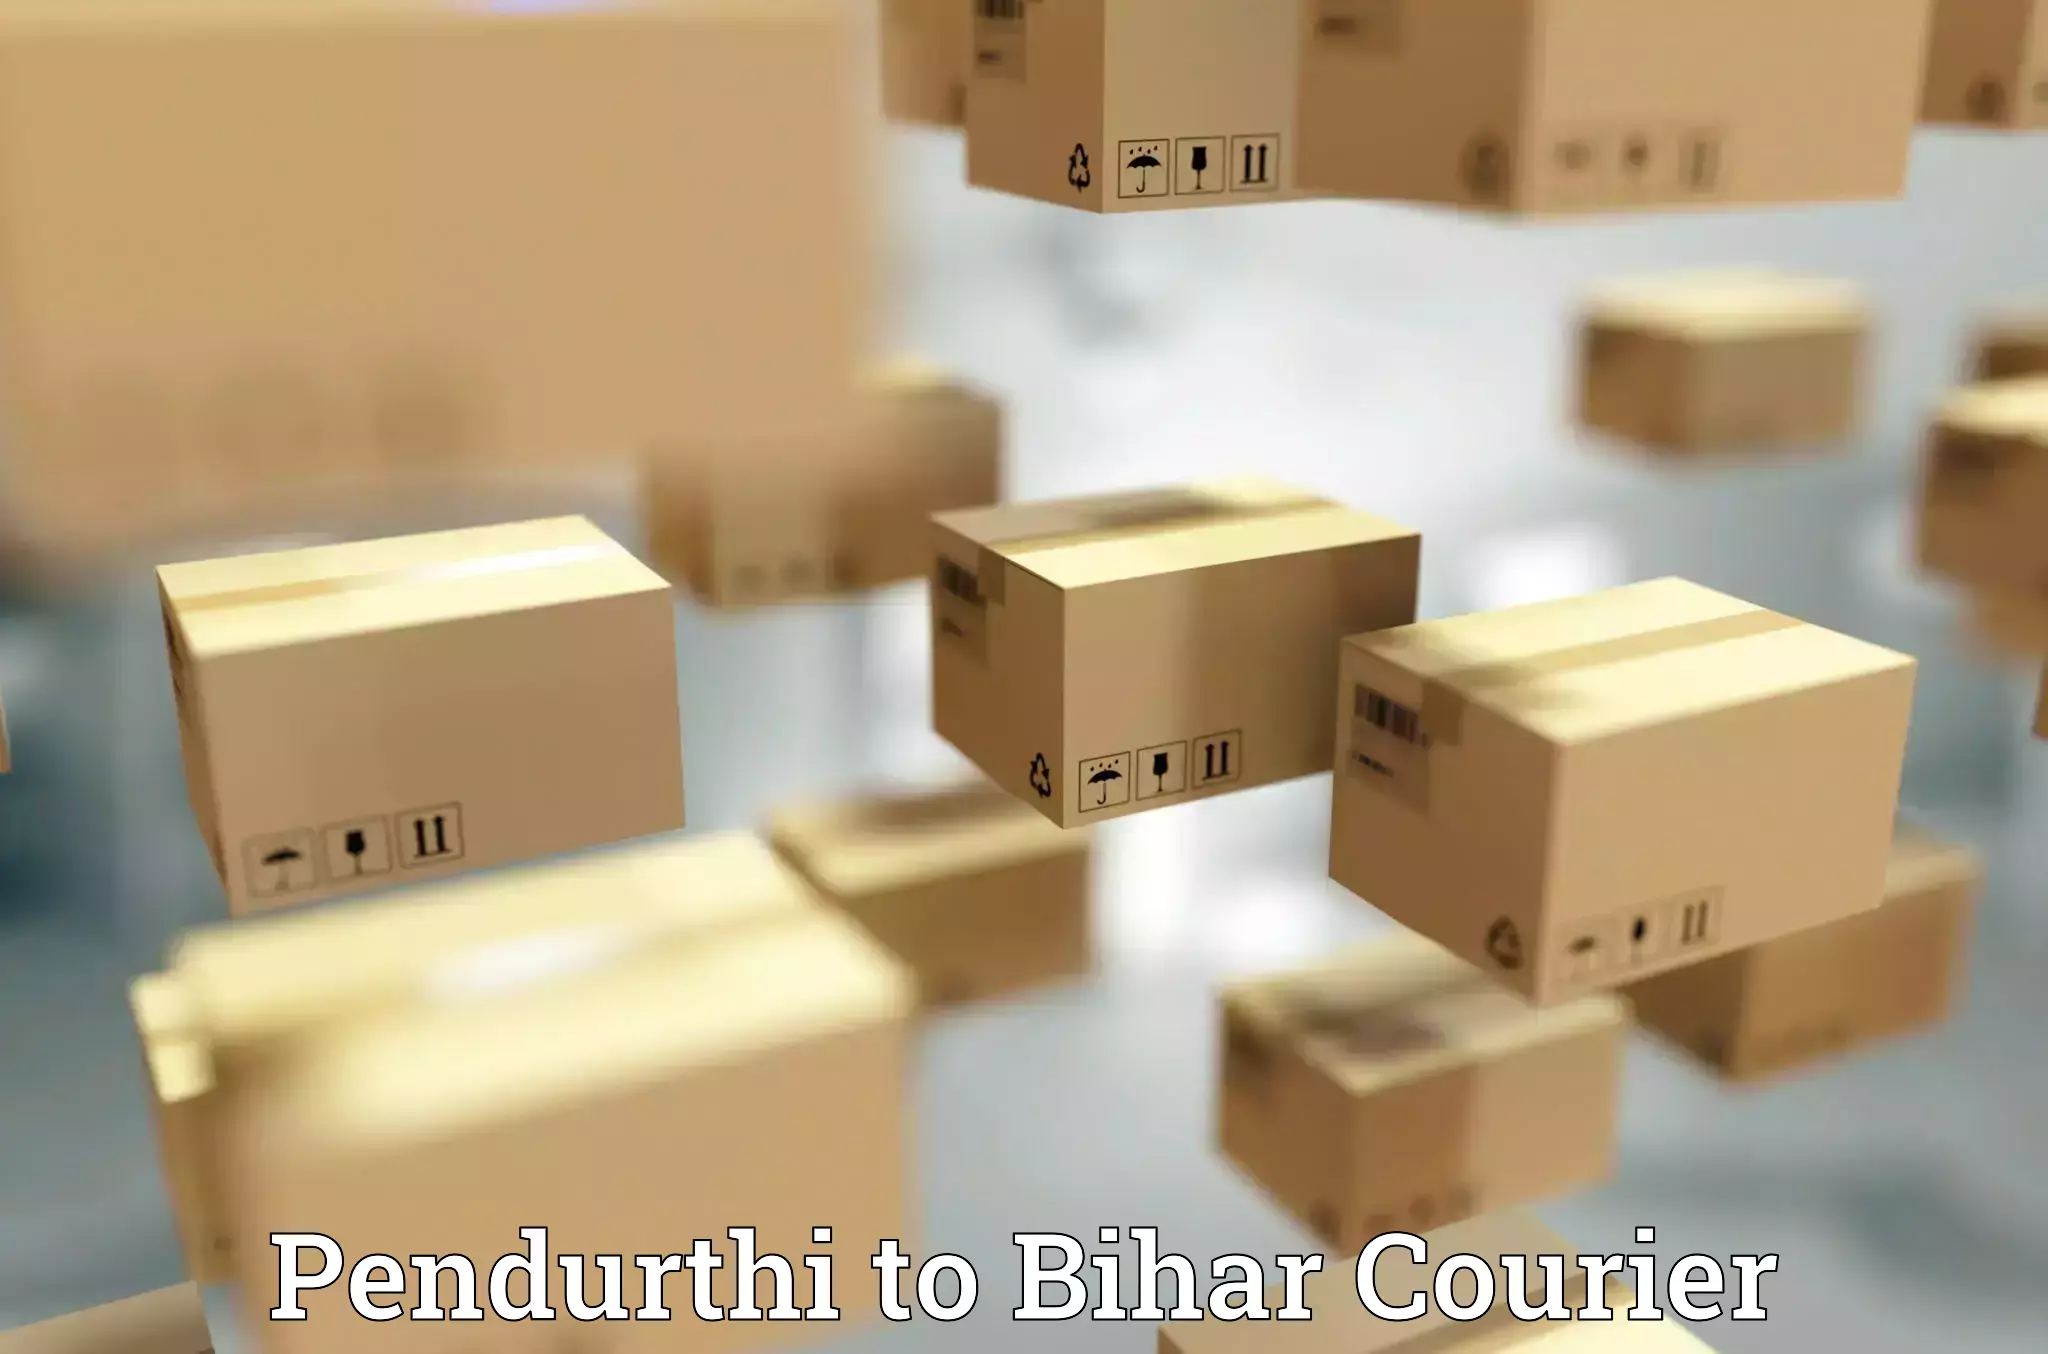 Bulk courier orders Pendurthi to Fatwah